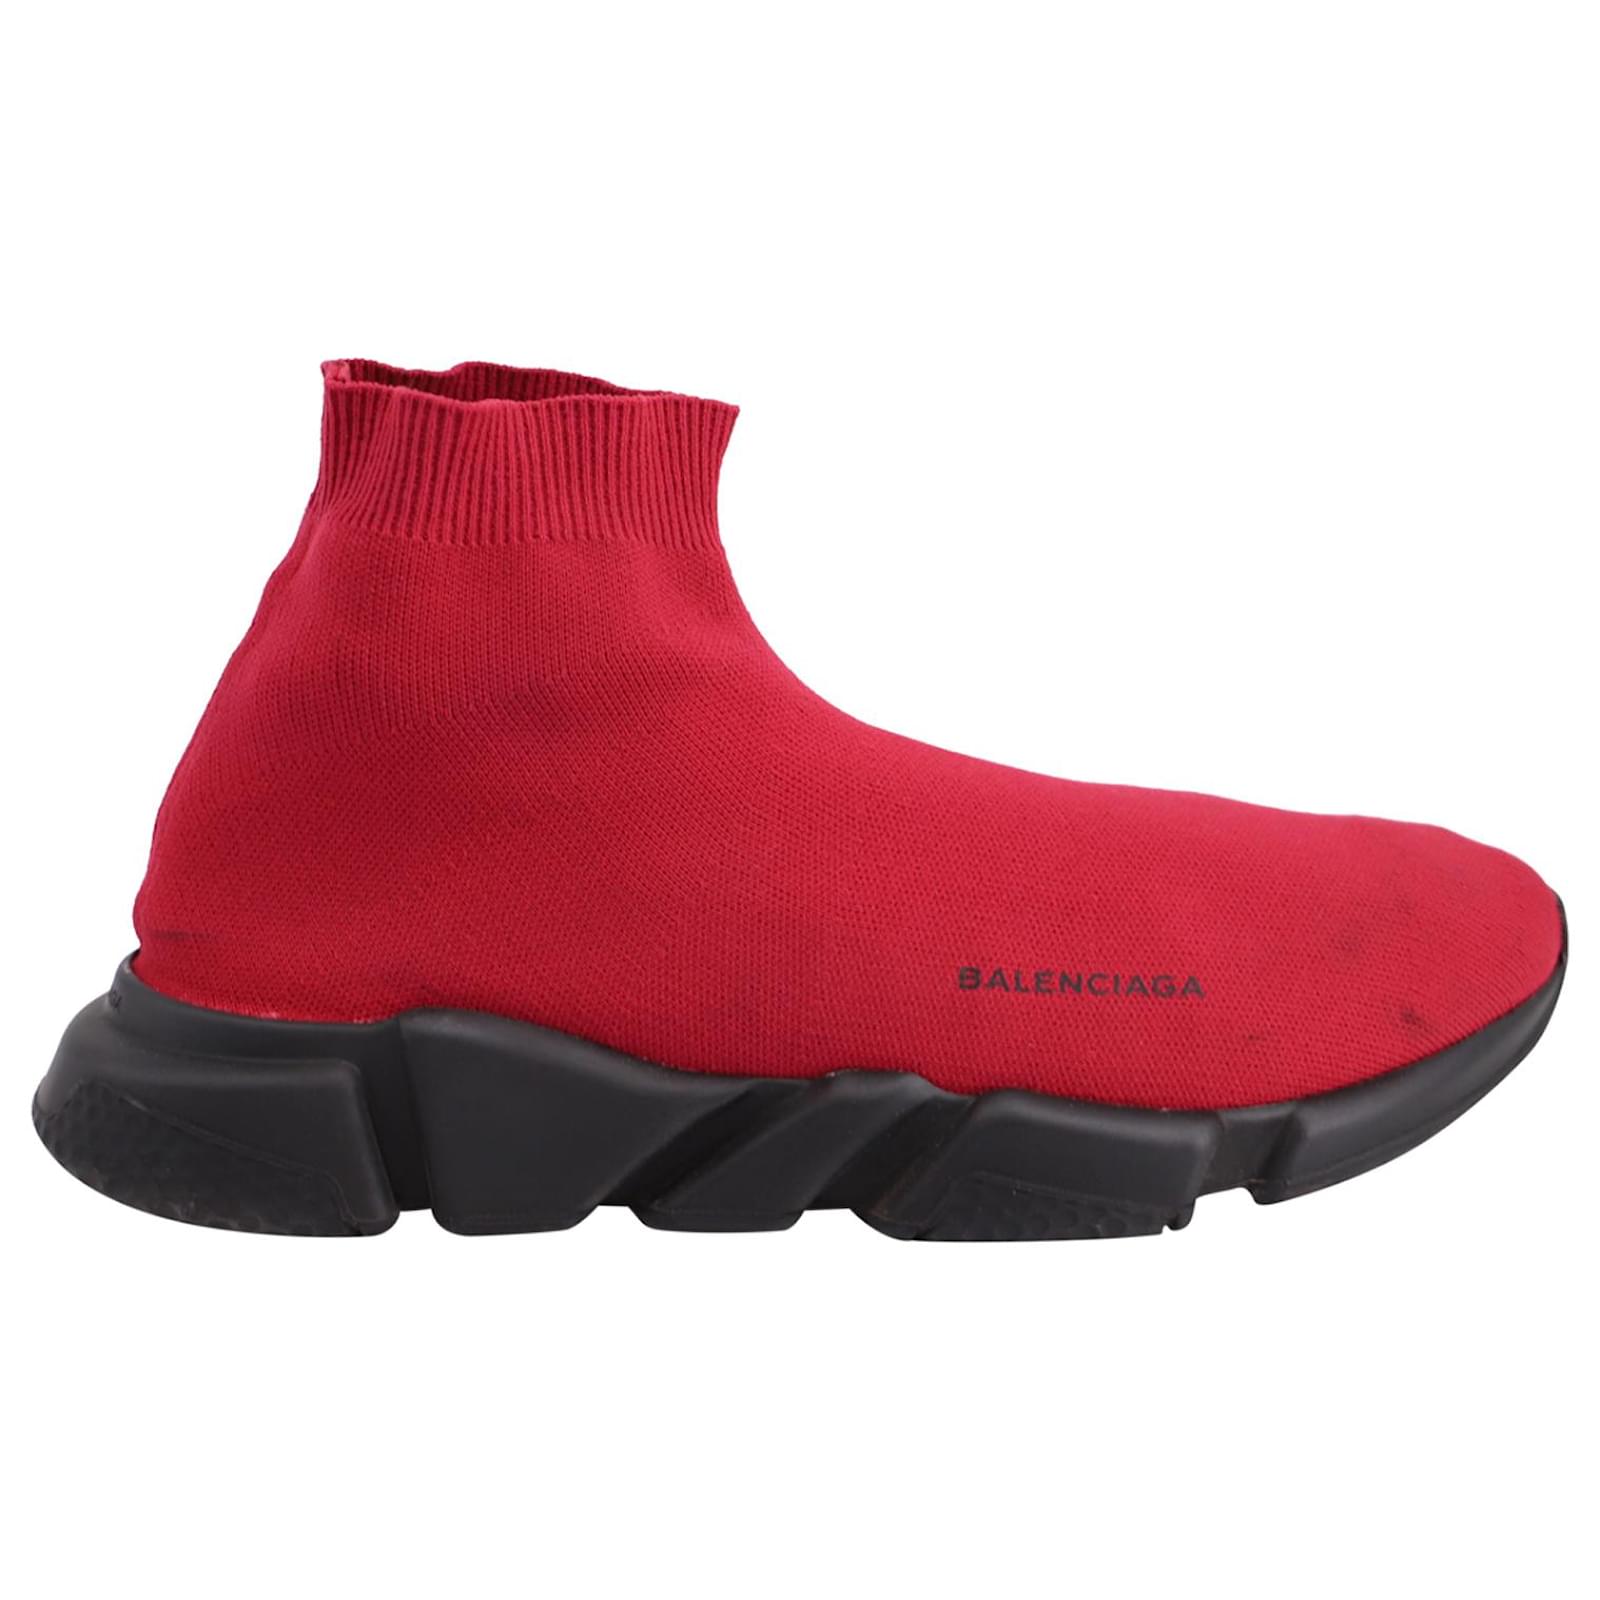 Balenciaga Red Fashion Sneakers